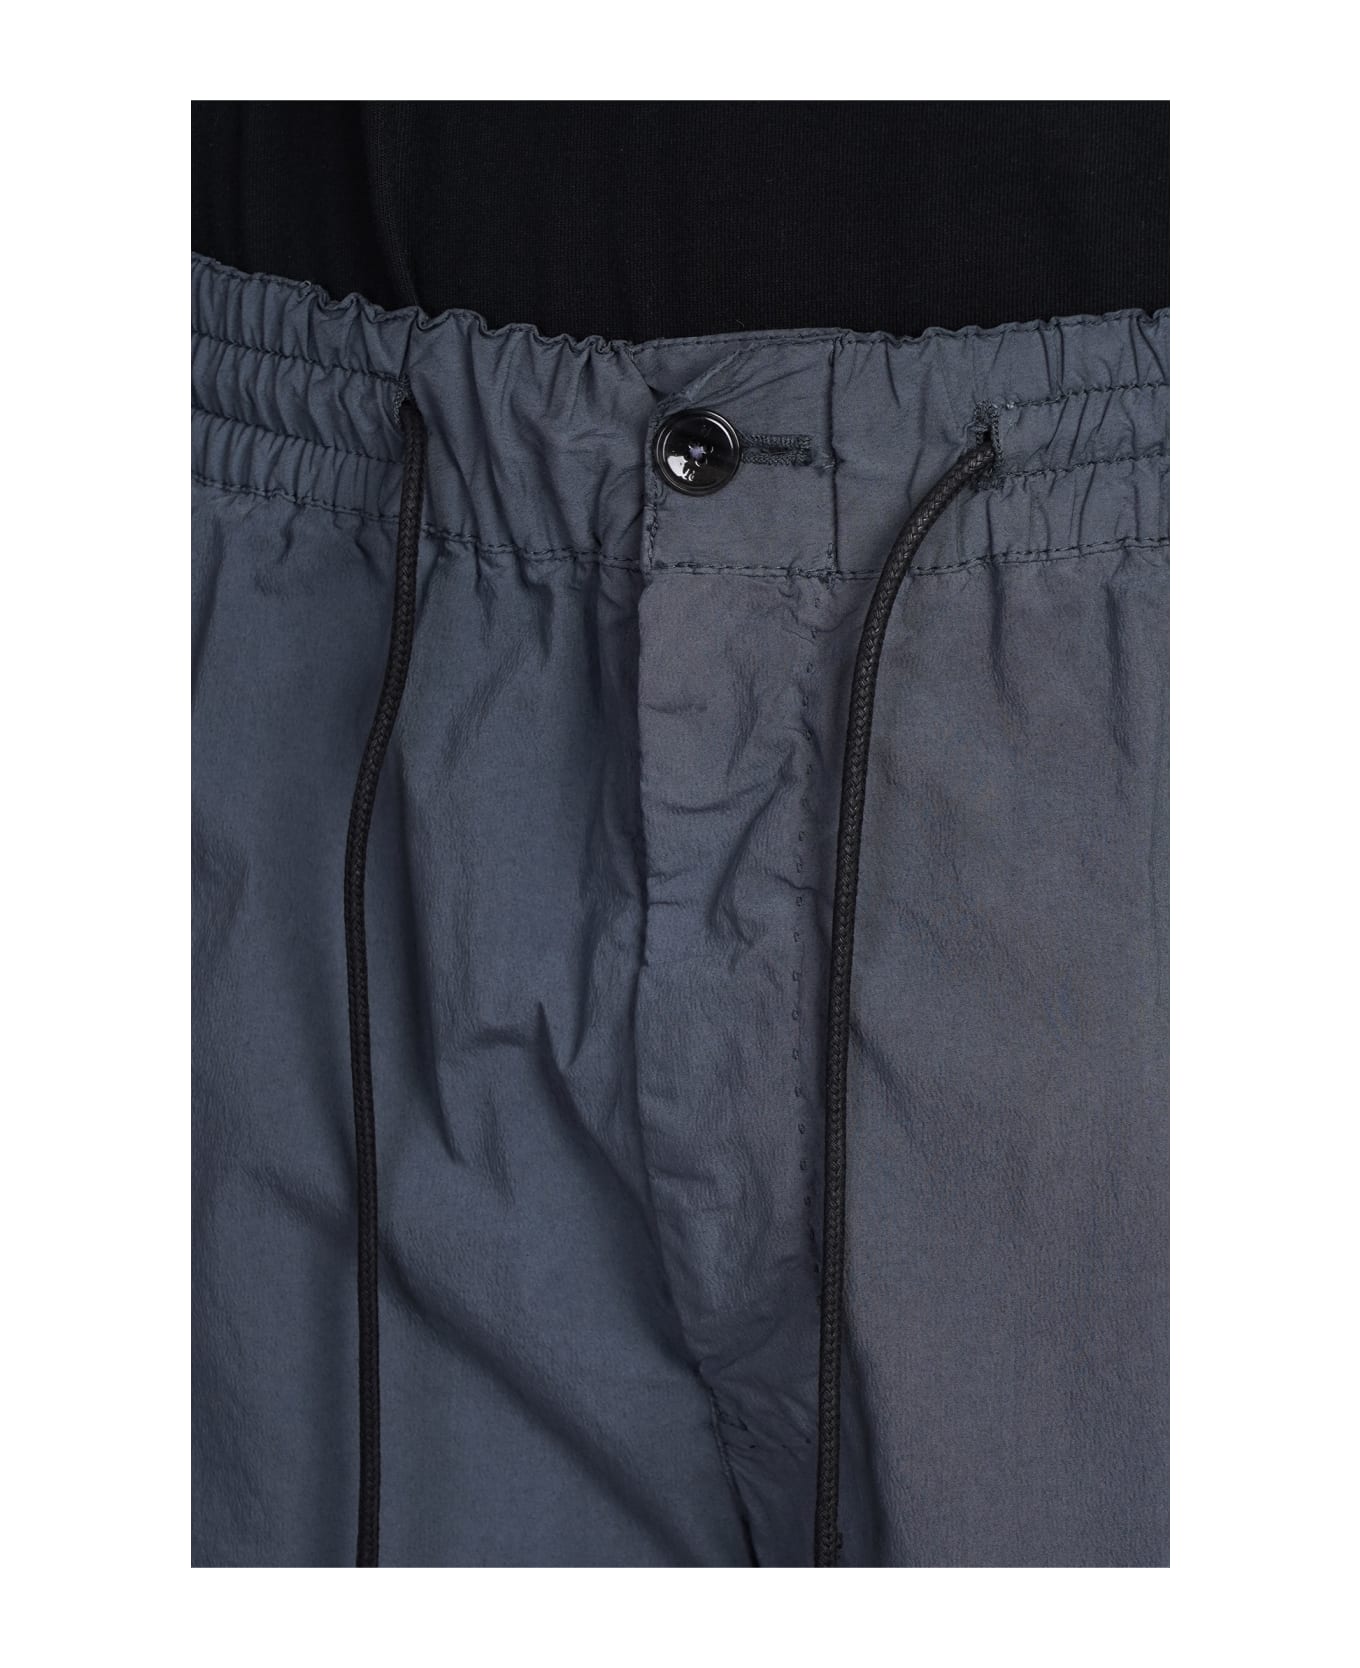 PT Torino Shorts In Grey Cotton - grey